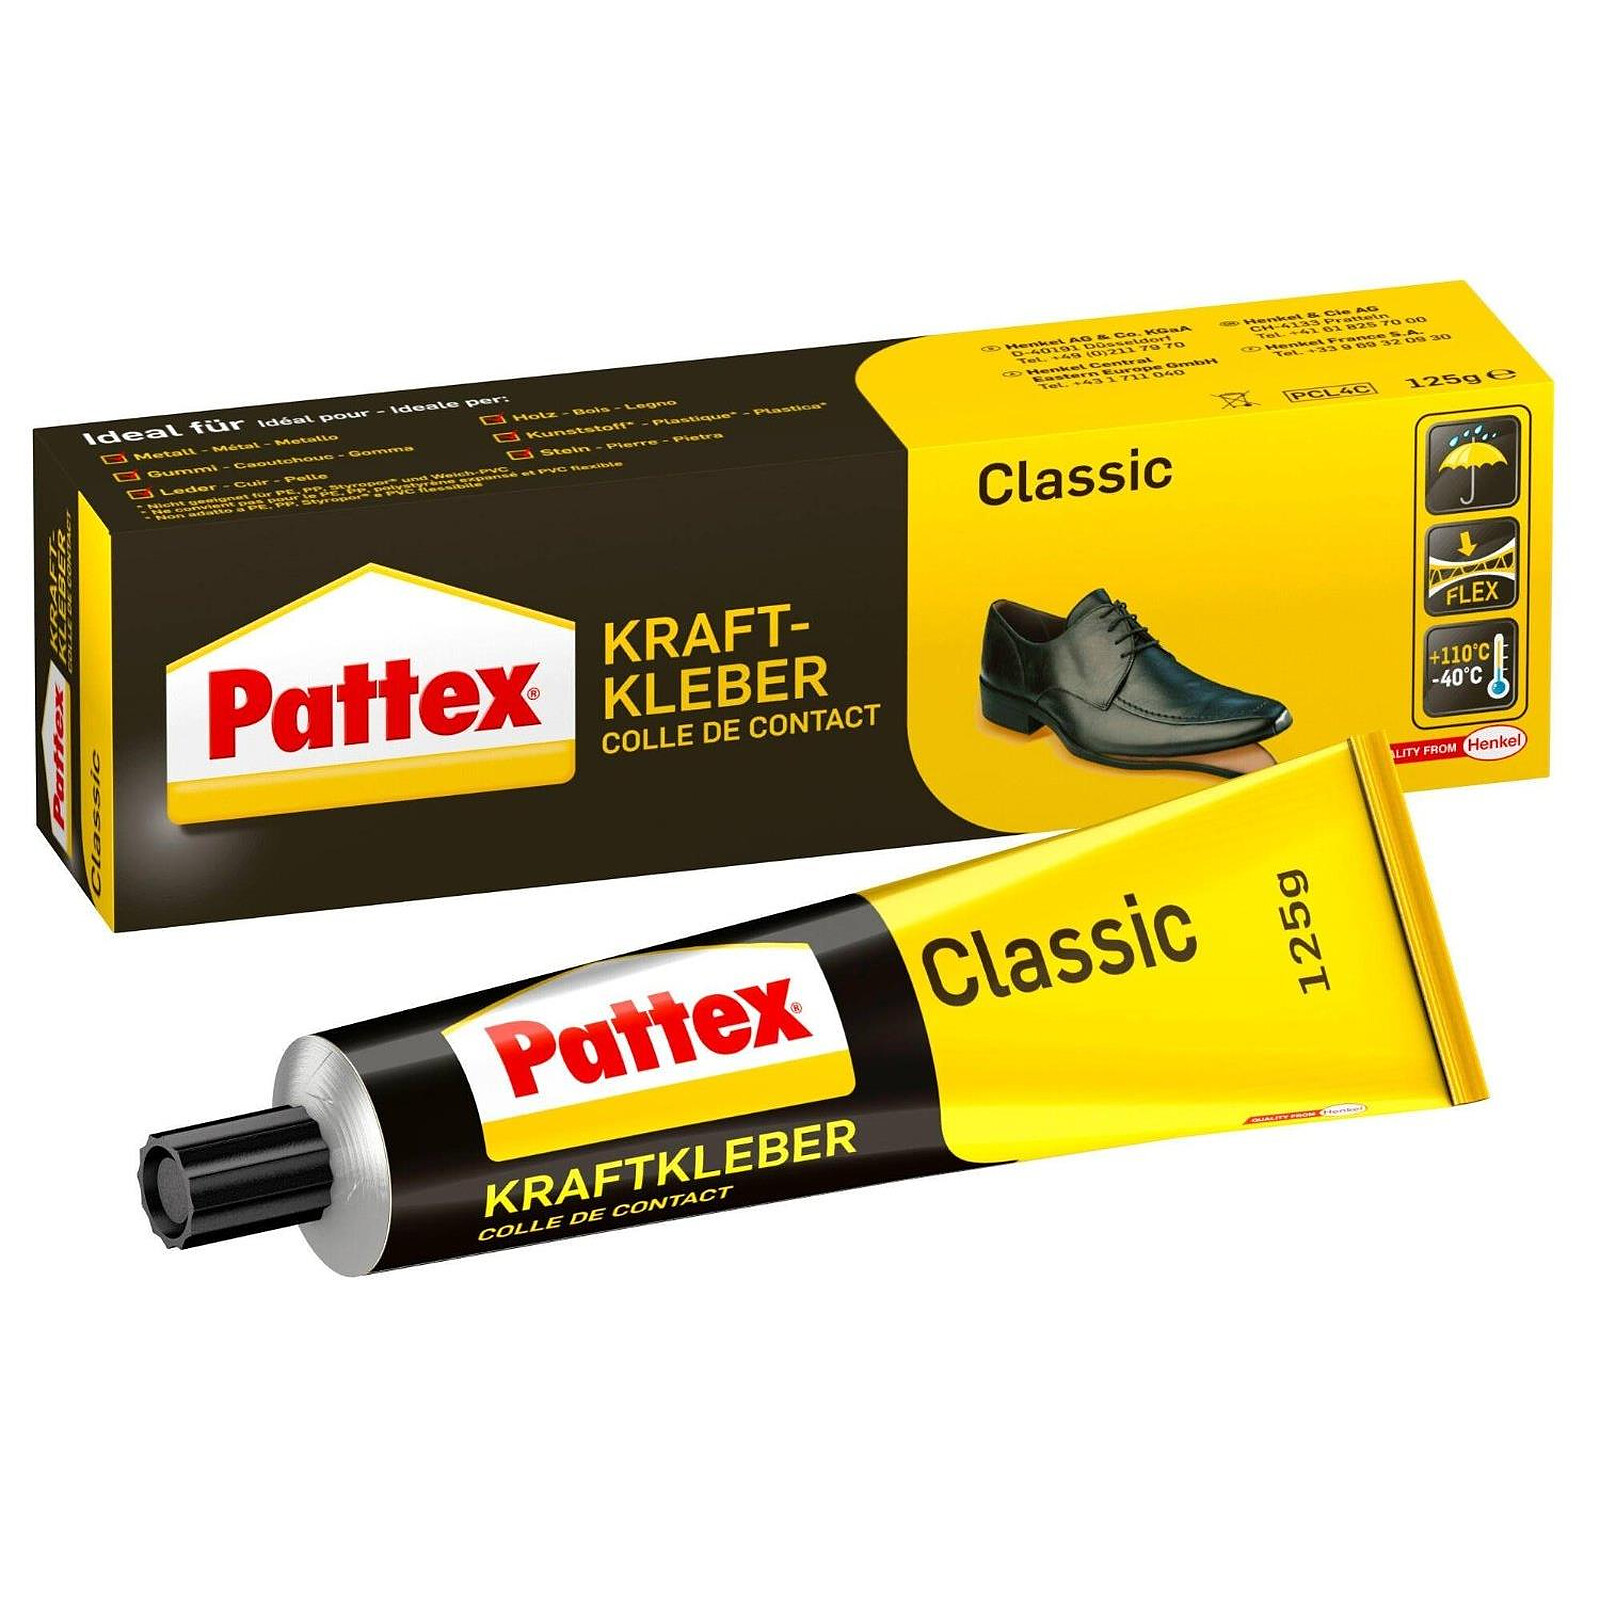 Colle Pattex, tube de 125 g, Accessories - Nettoyage